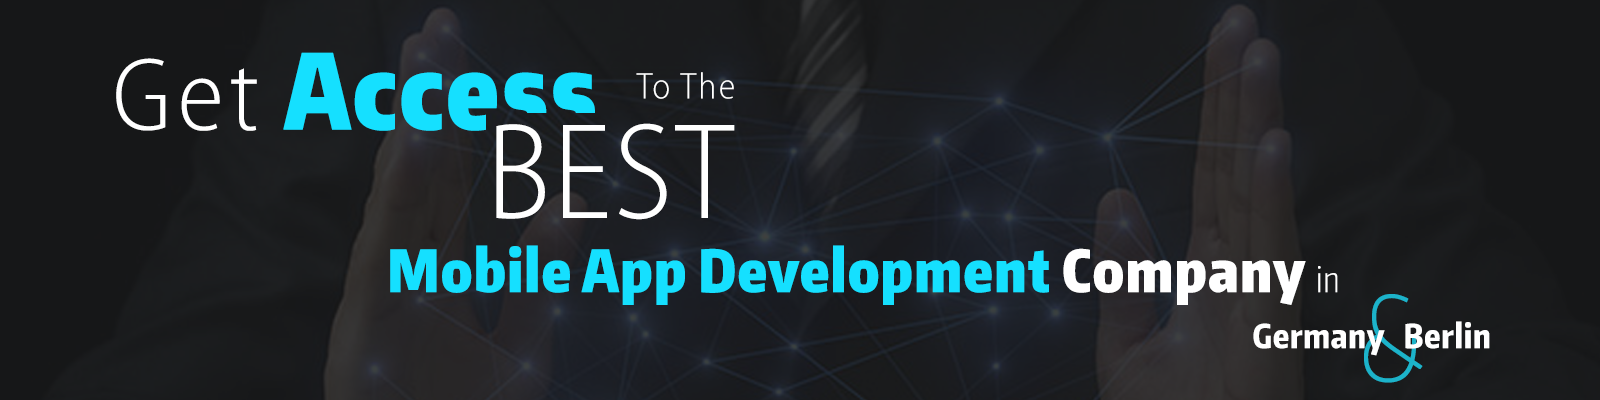 mobile app development company germany